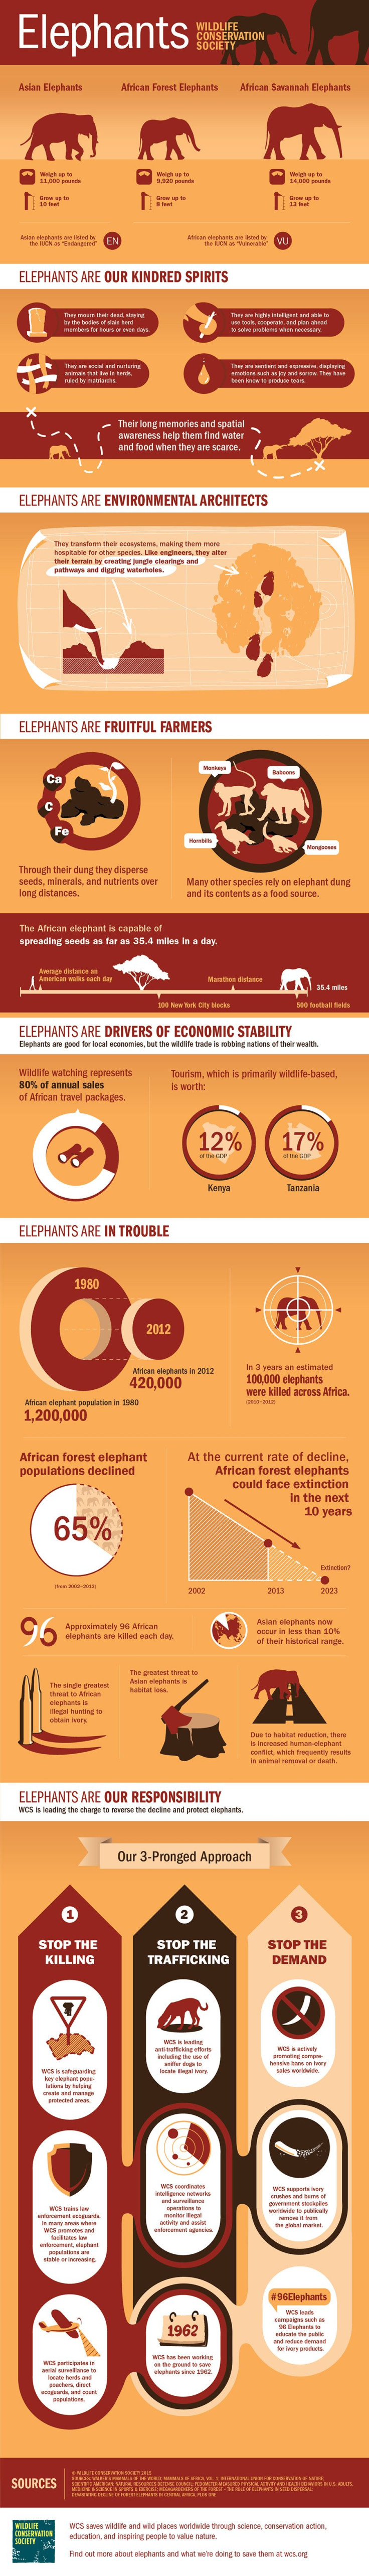 World Elephant Day 2015 Infographic